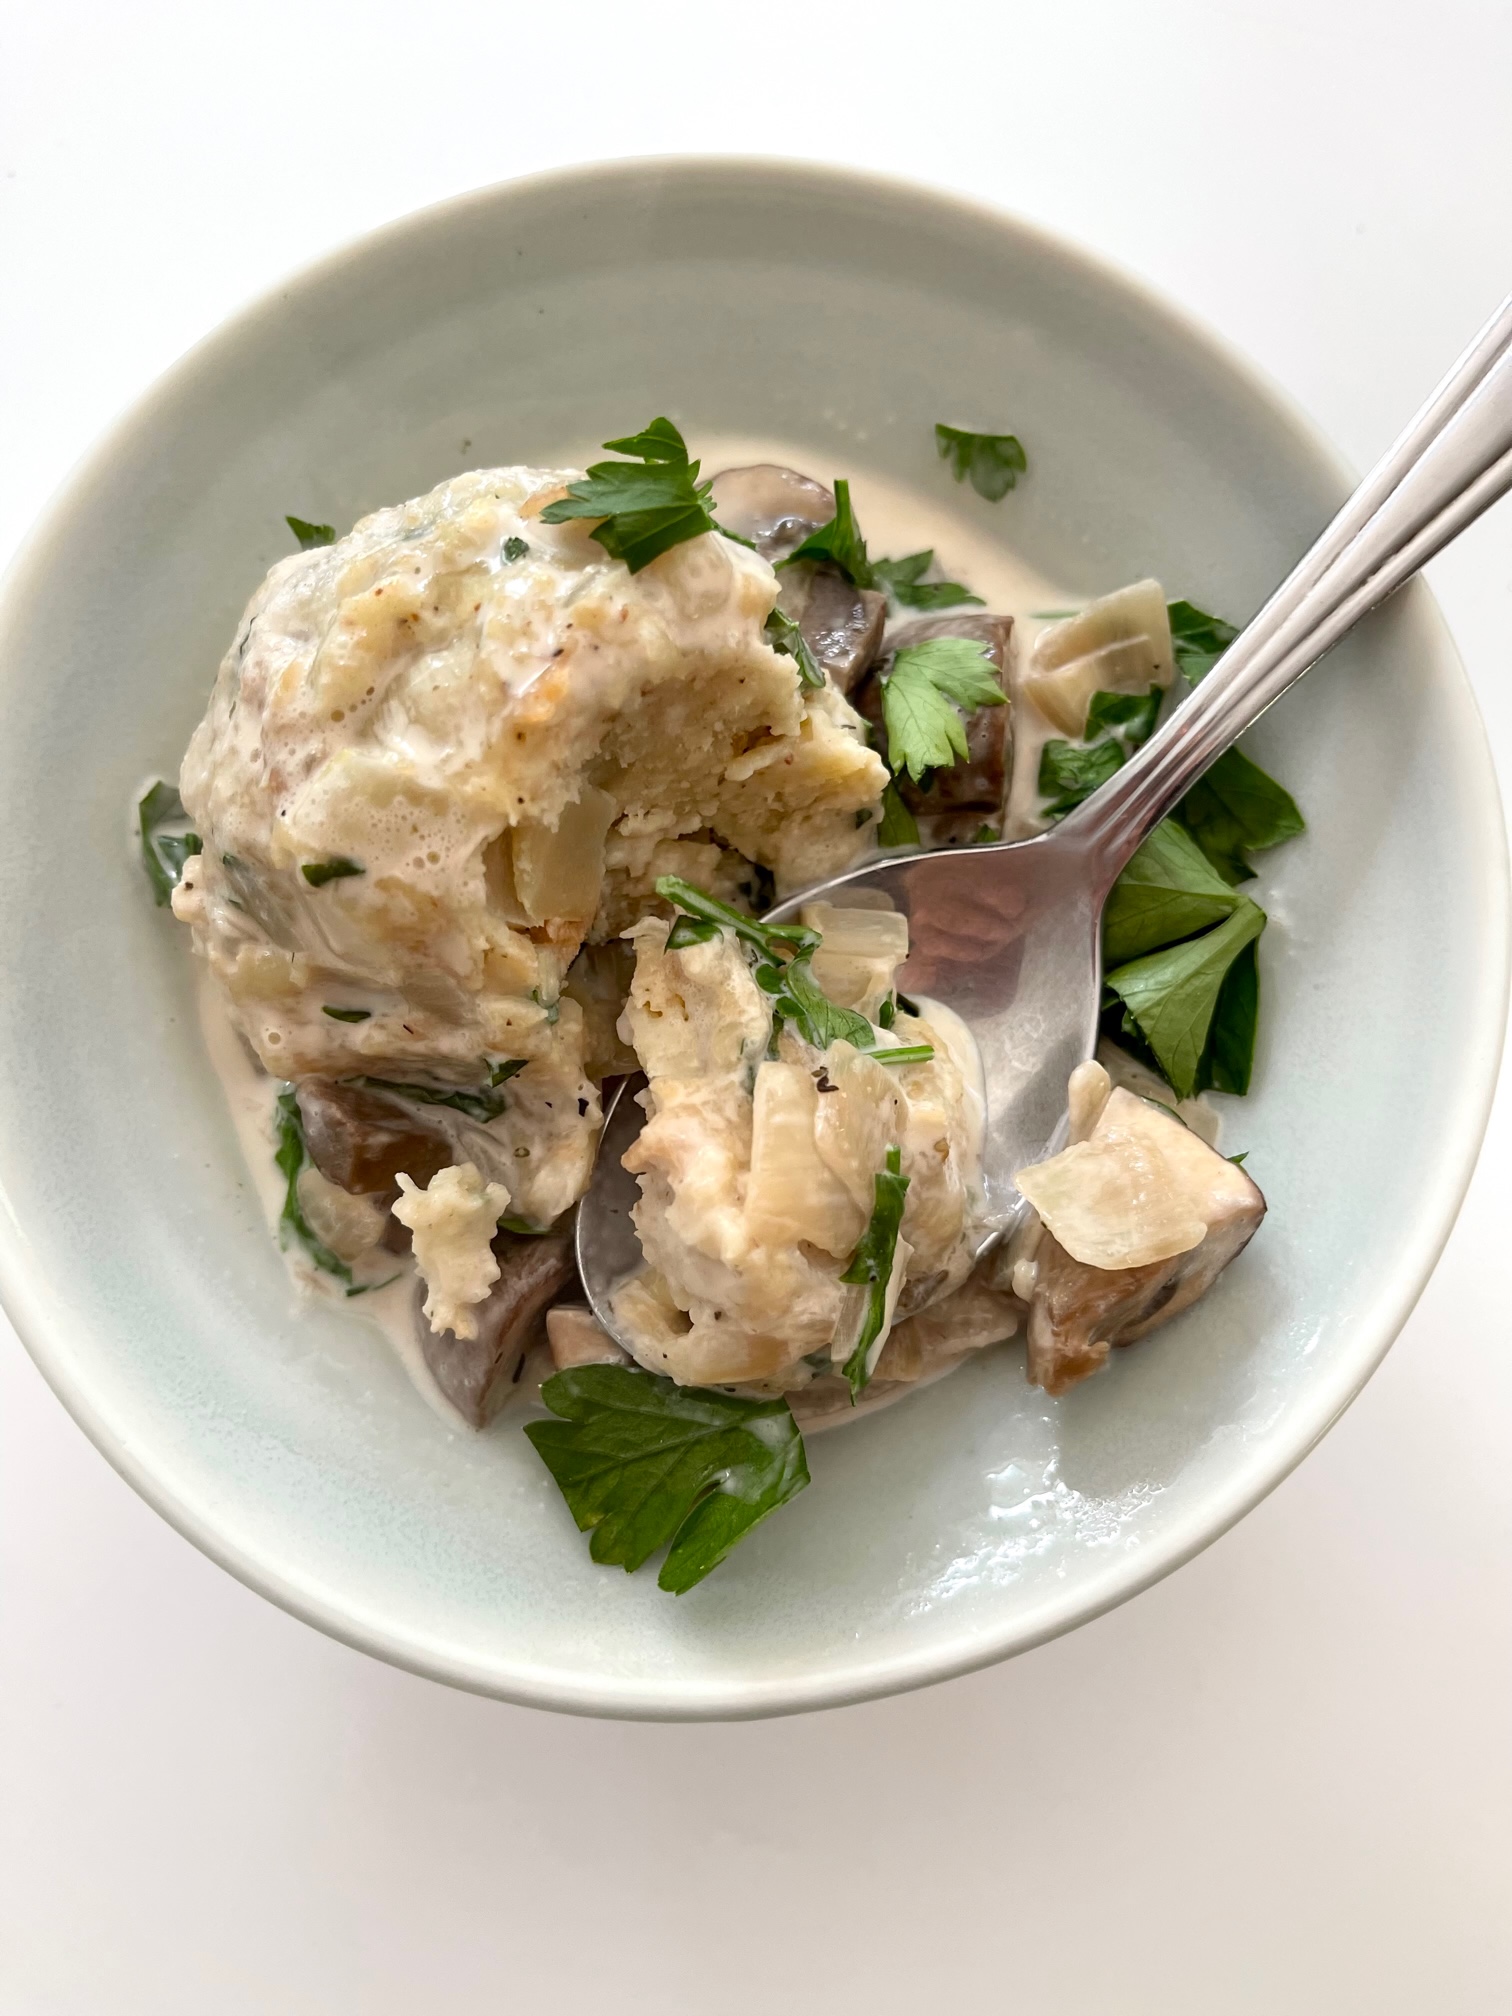 Semmelknödel & Pilzrahm (Braverian Bread Dumplings & Cream of Mushroom)